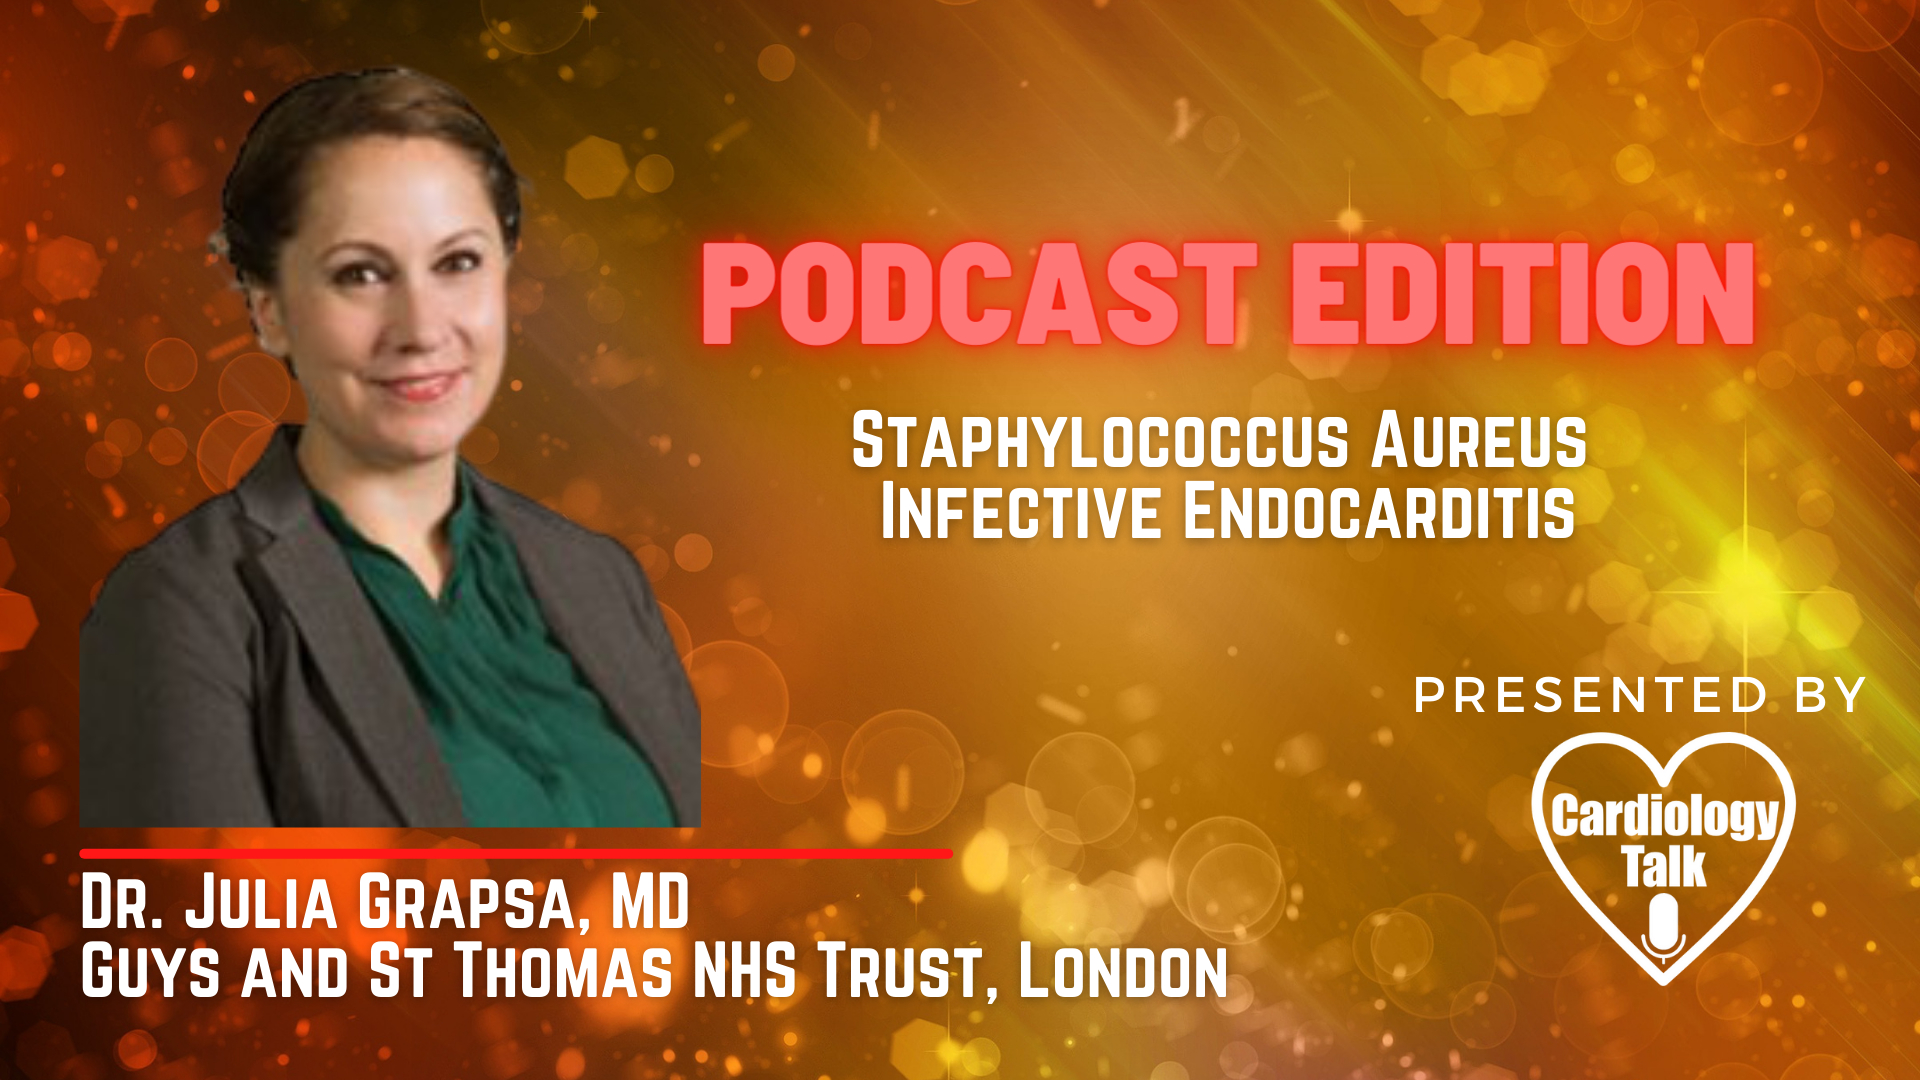 Podcast- Dr. Julia Grapsa, MD -Staphylococcus Aureus Infective Endocarditis